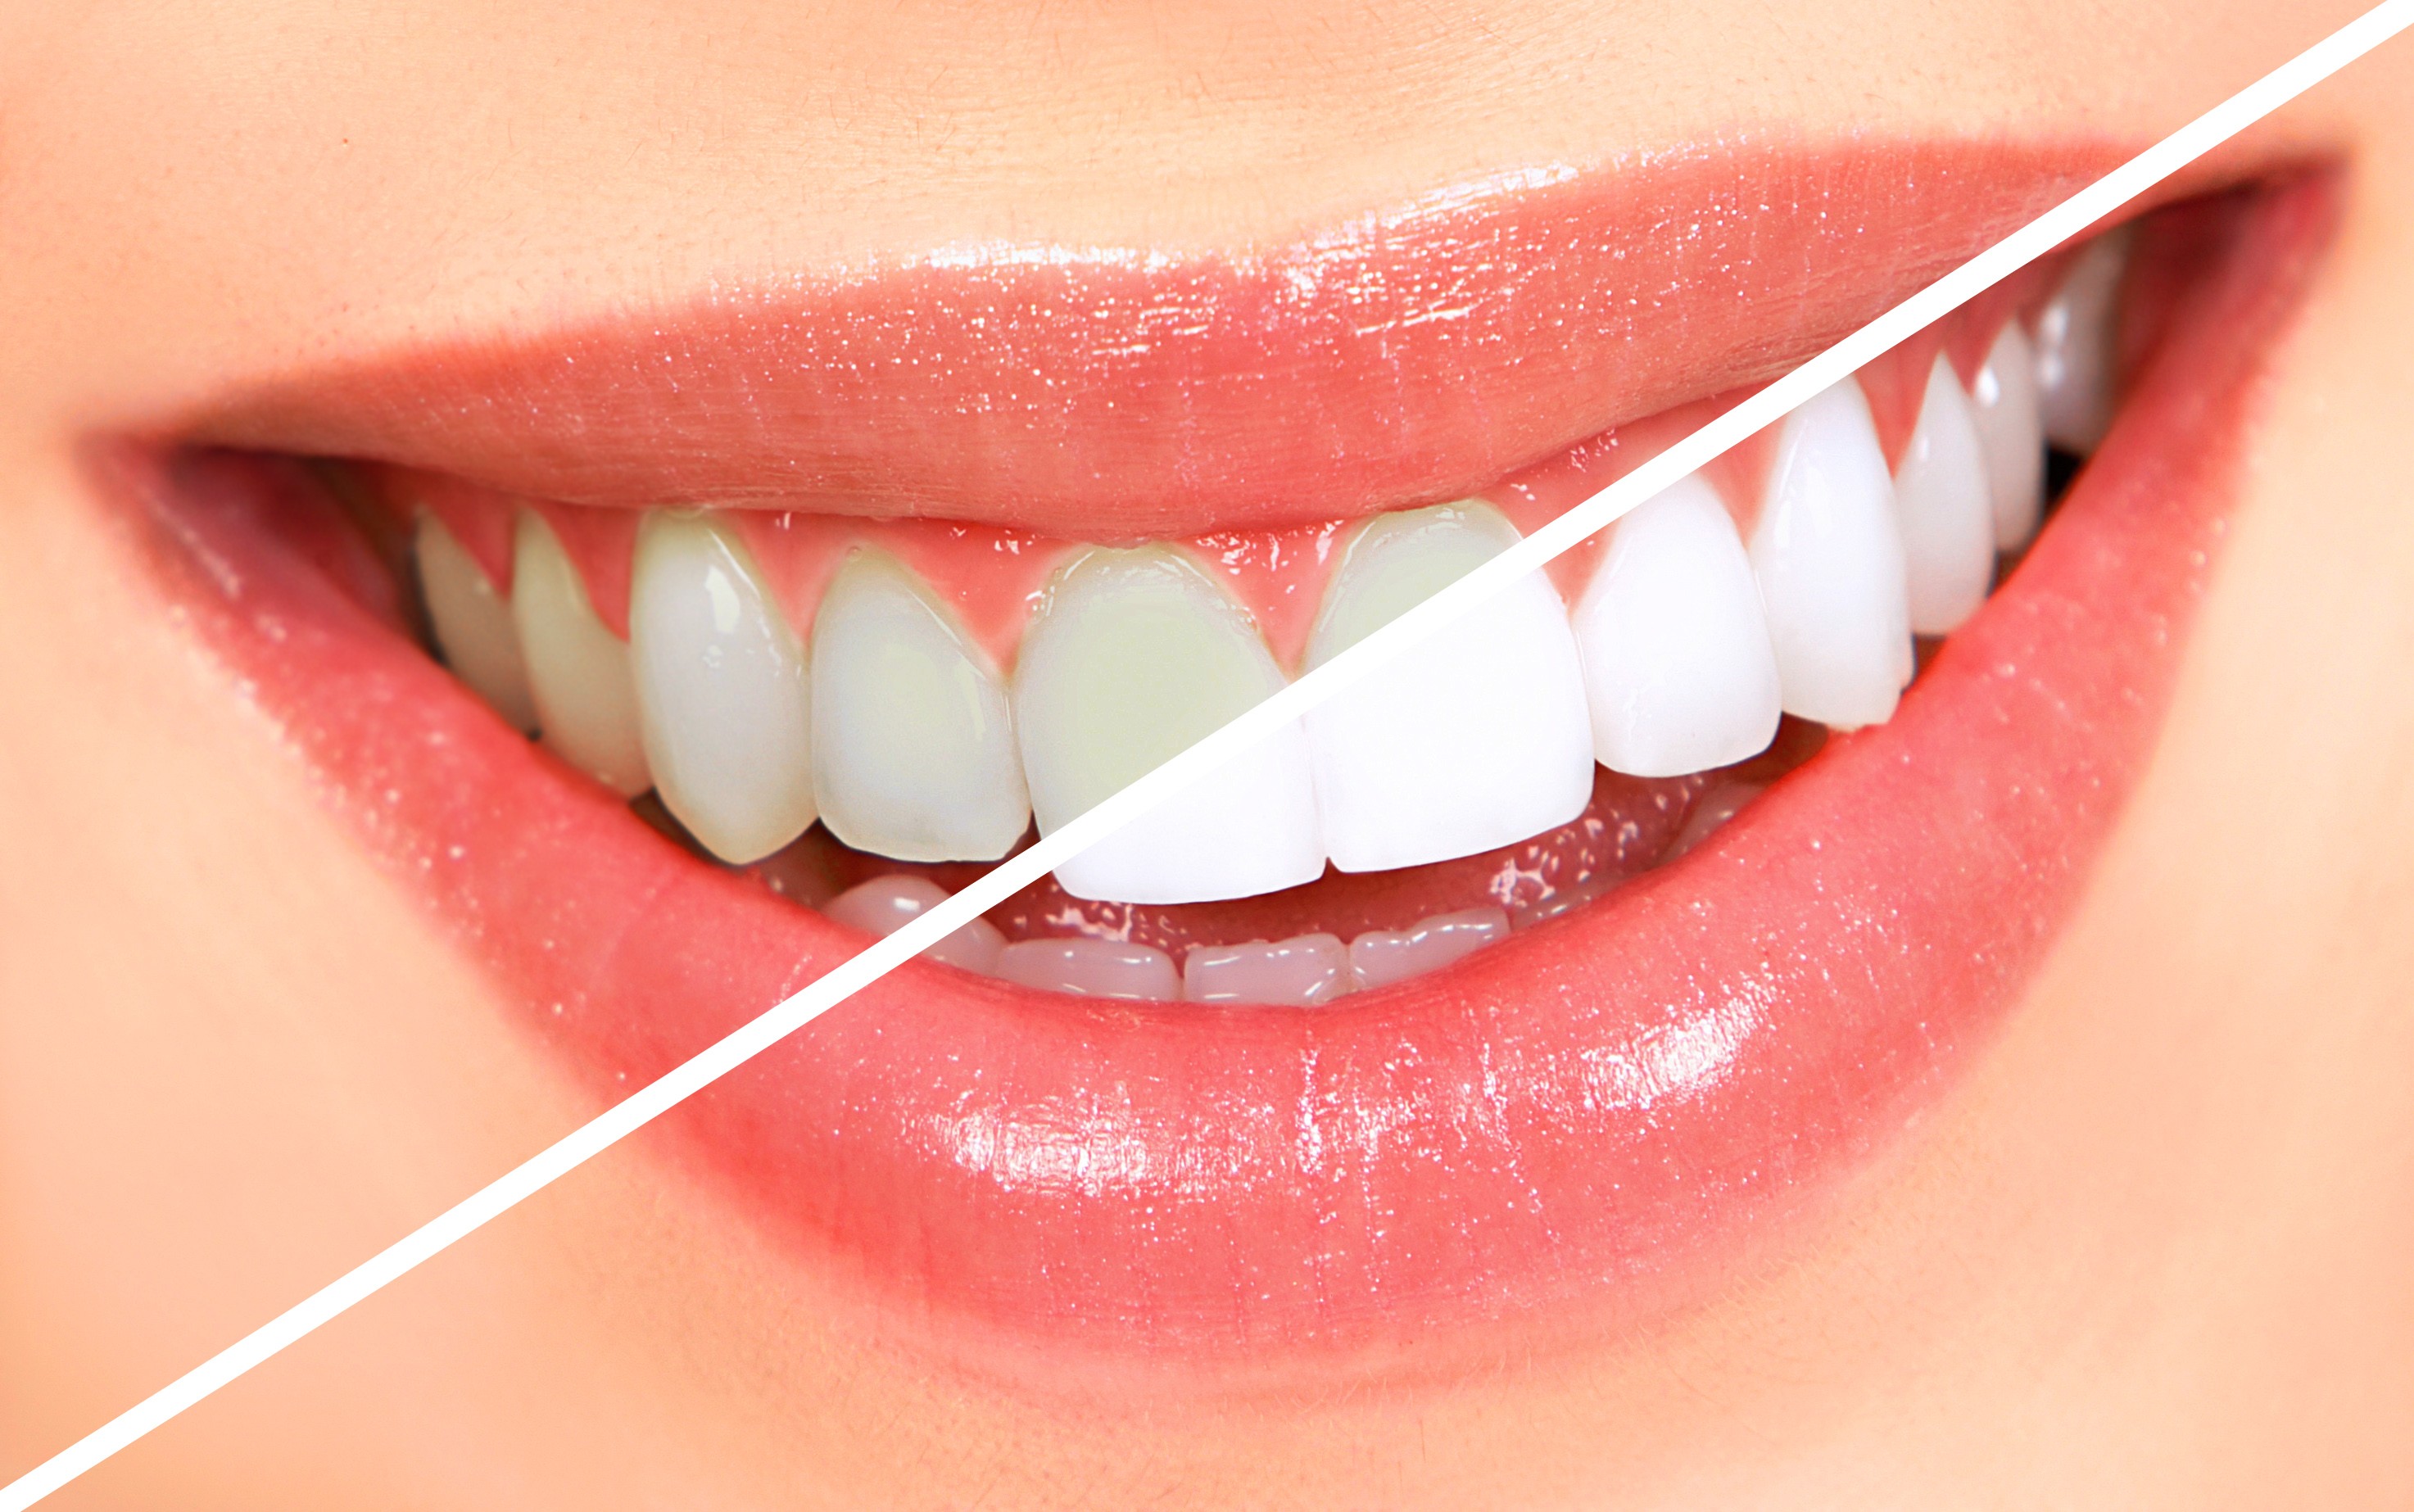 teeth-whitening3